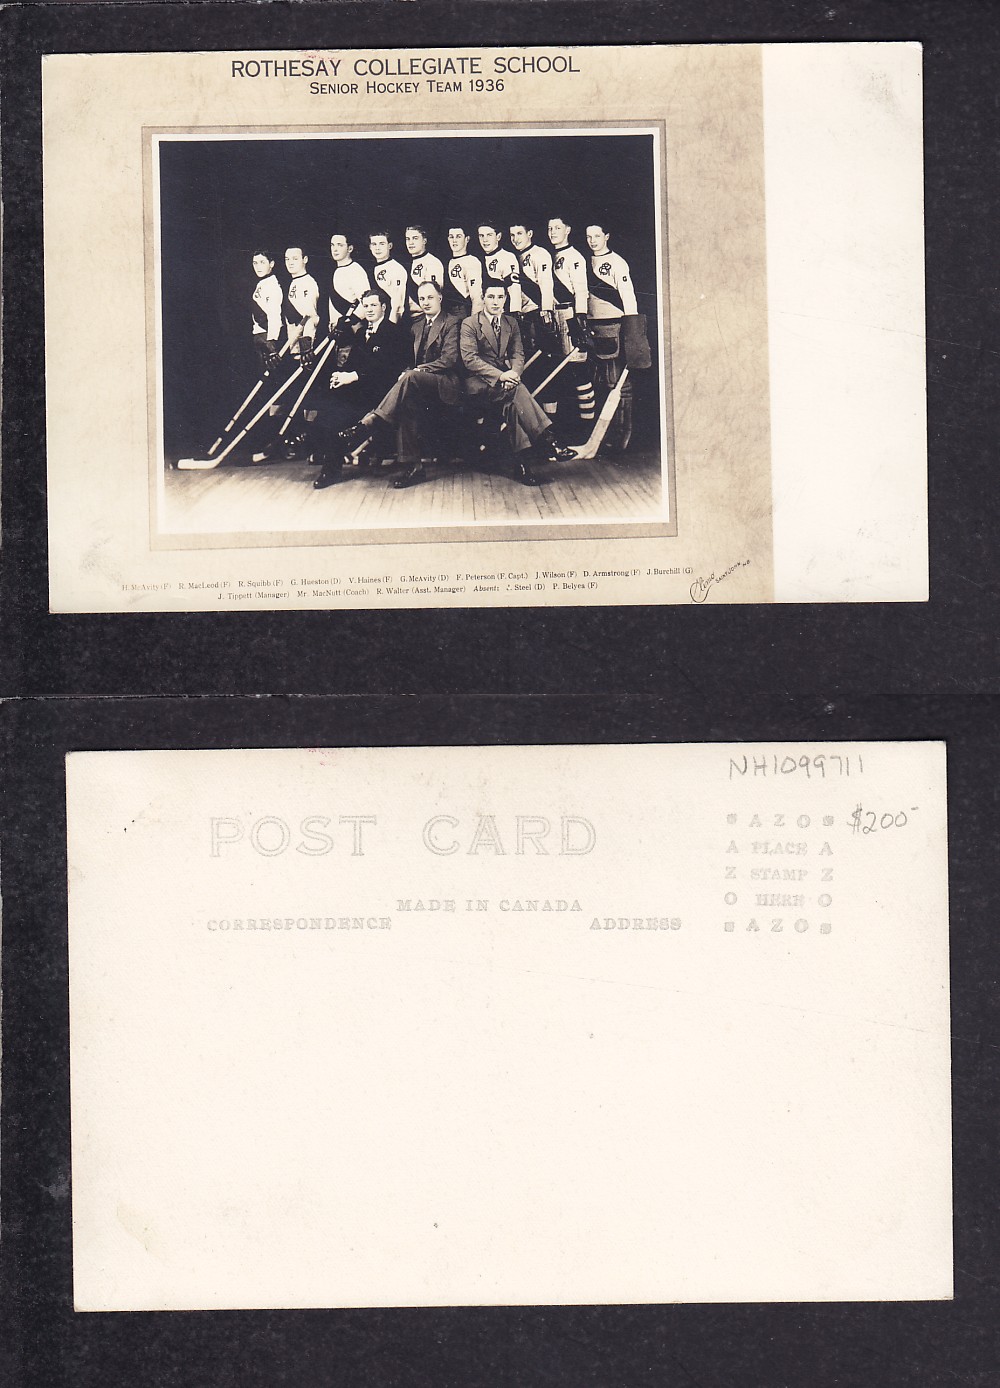 1936 ROTHESAY HOCKEY TEAM POST CARD photo